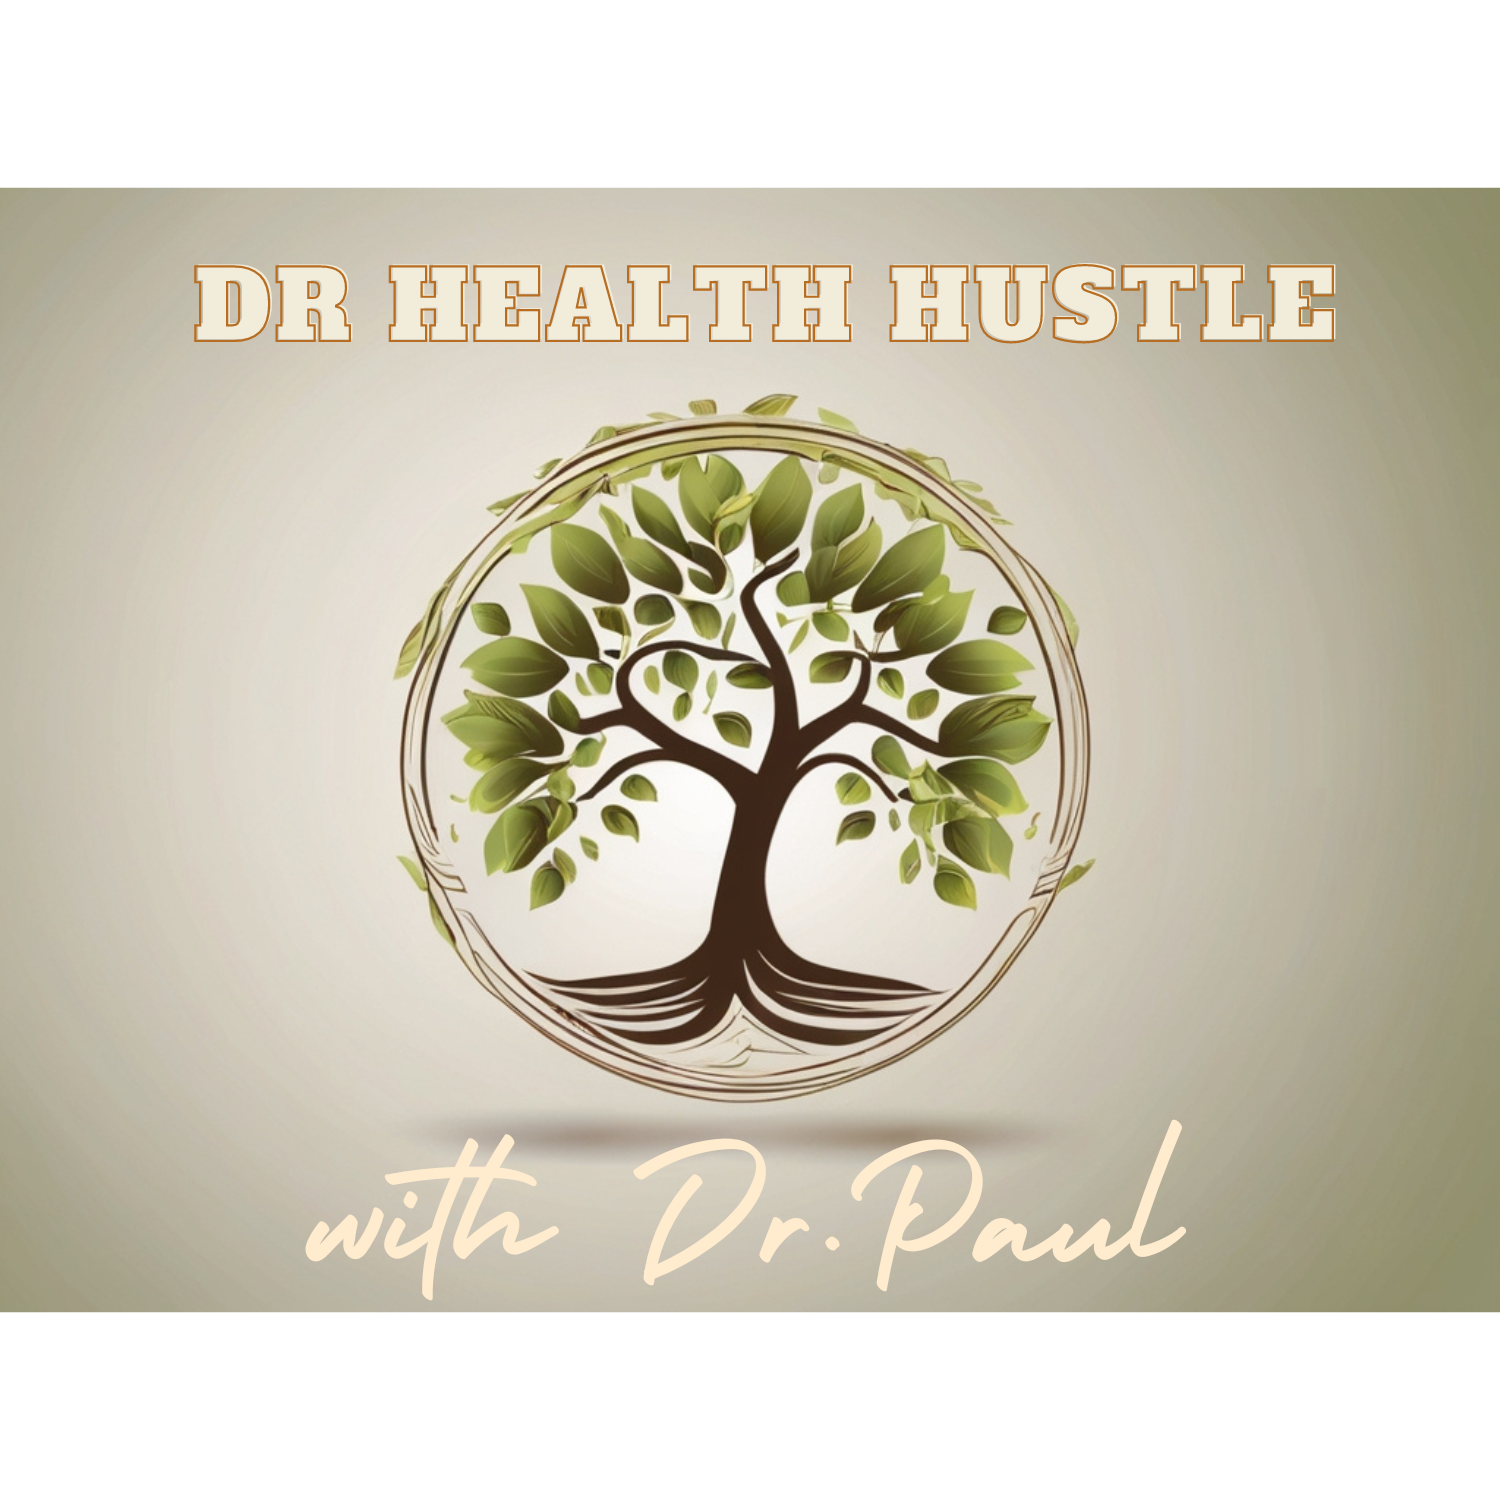 Dr Health Hustle